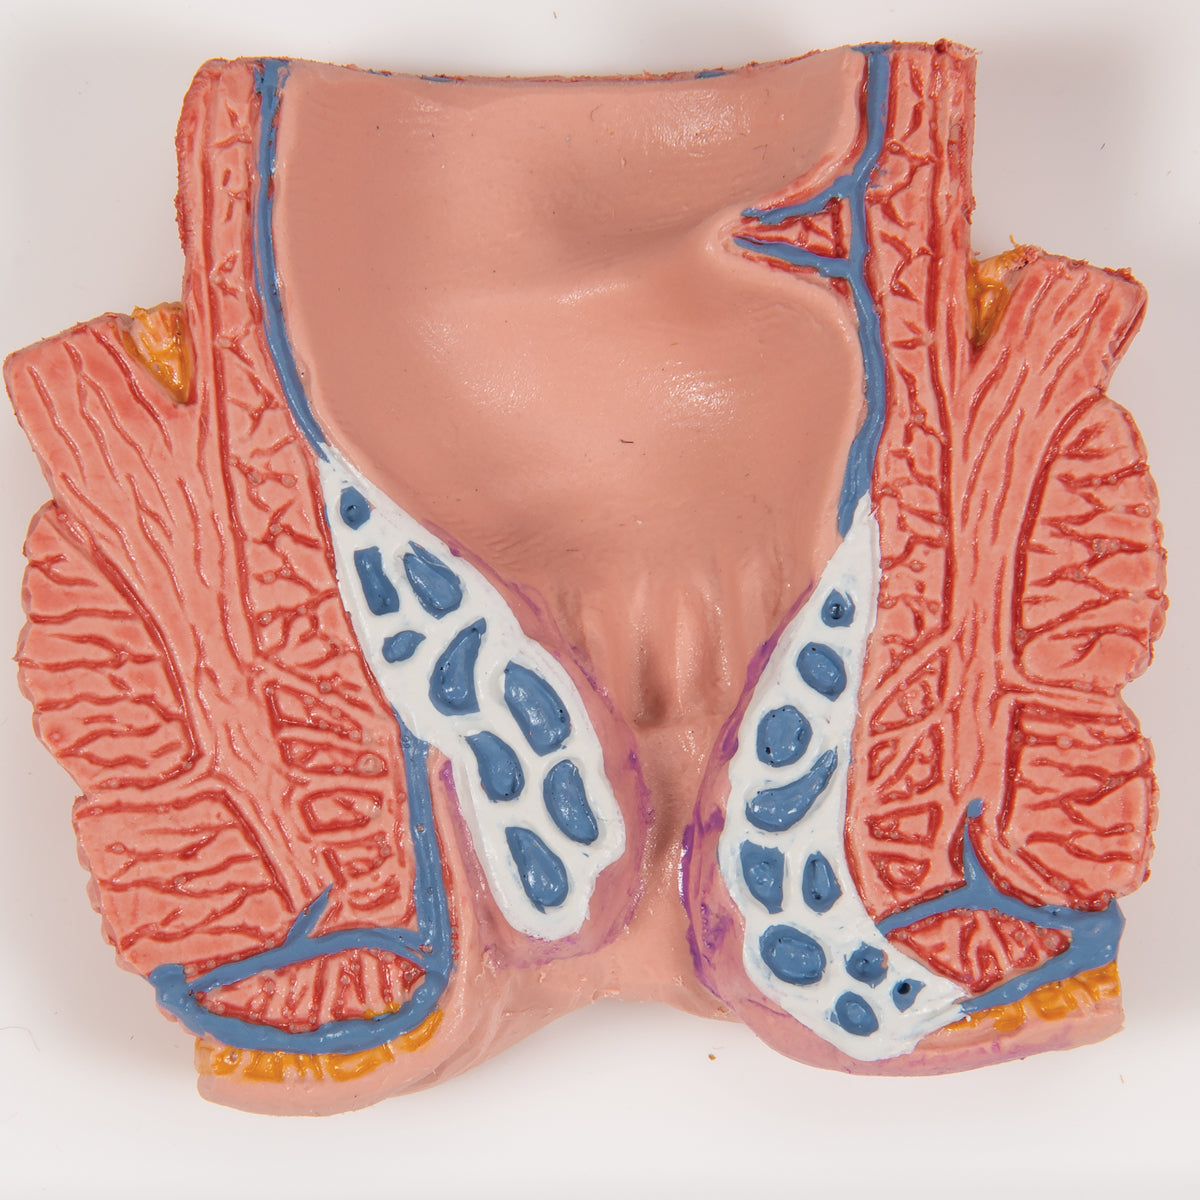 Model of the rectum showing hemorrhoids